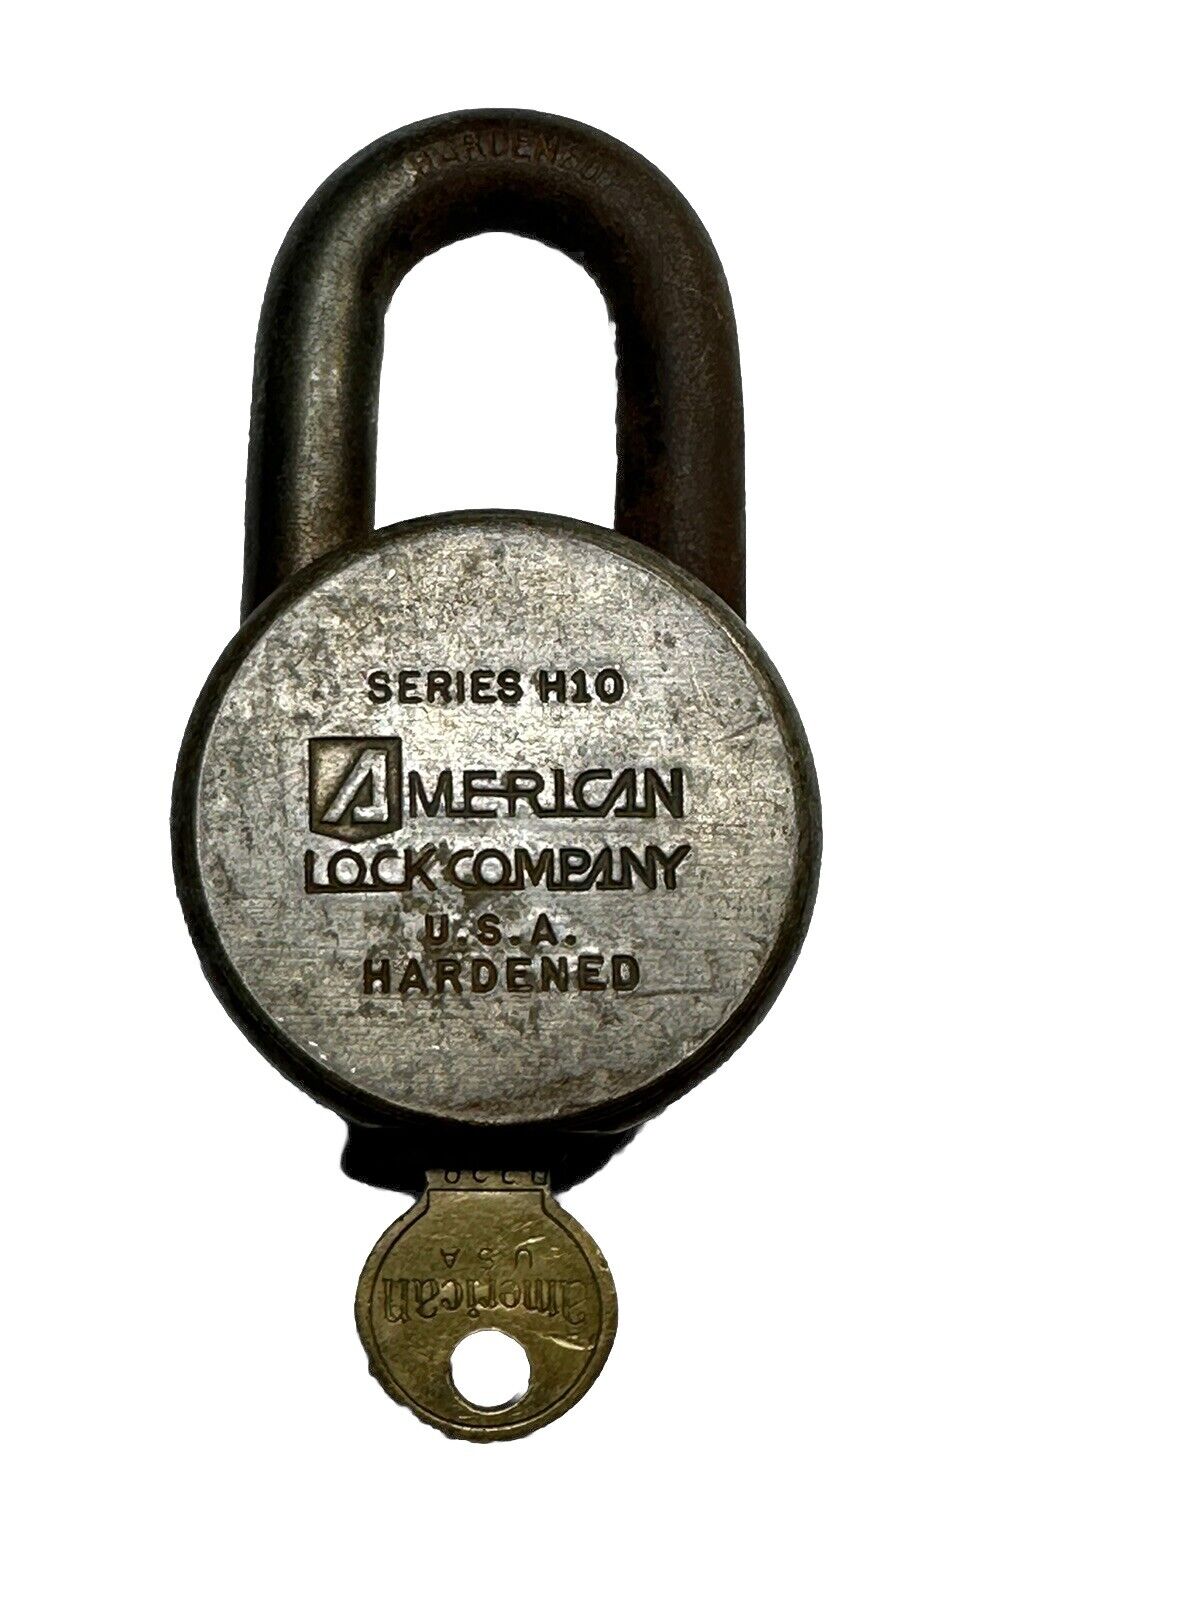 Vintage American Lock Company Series H10 Hardened Padlock W/ Original Key Works